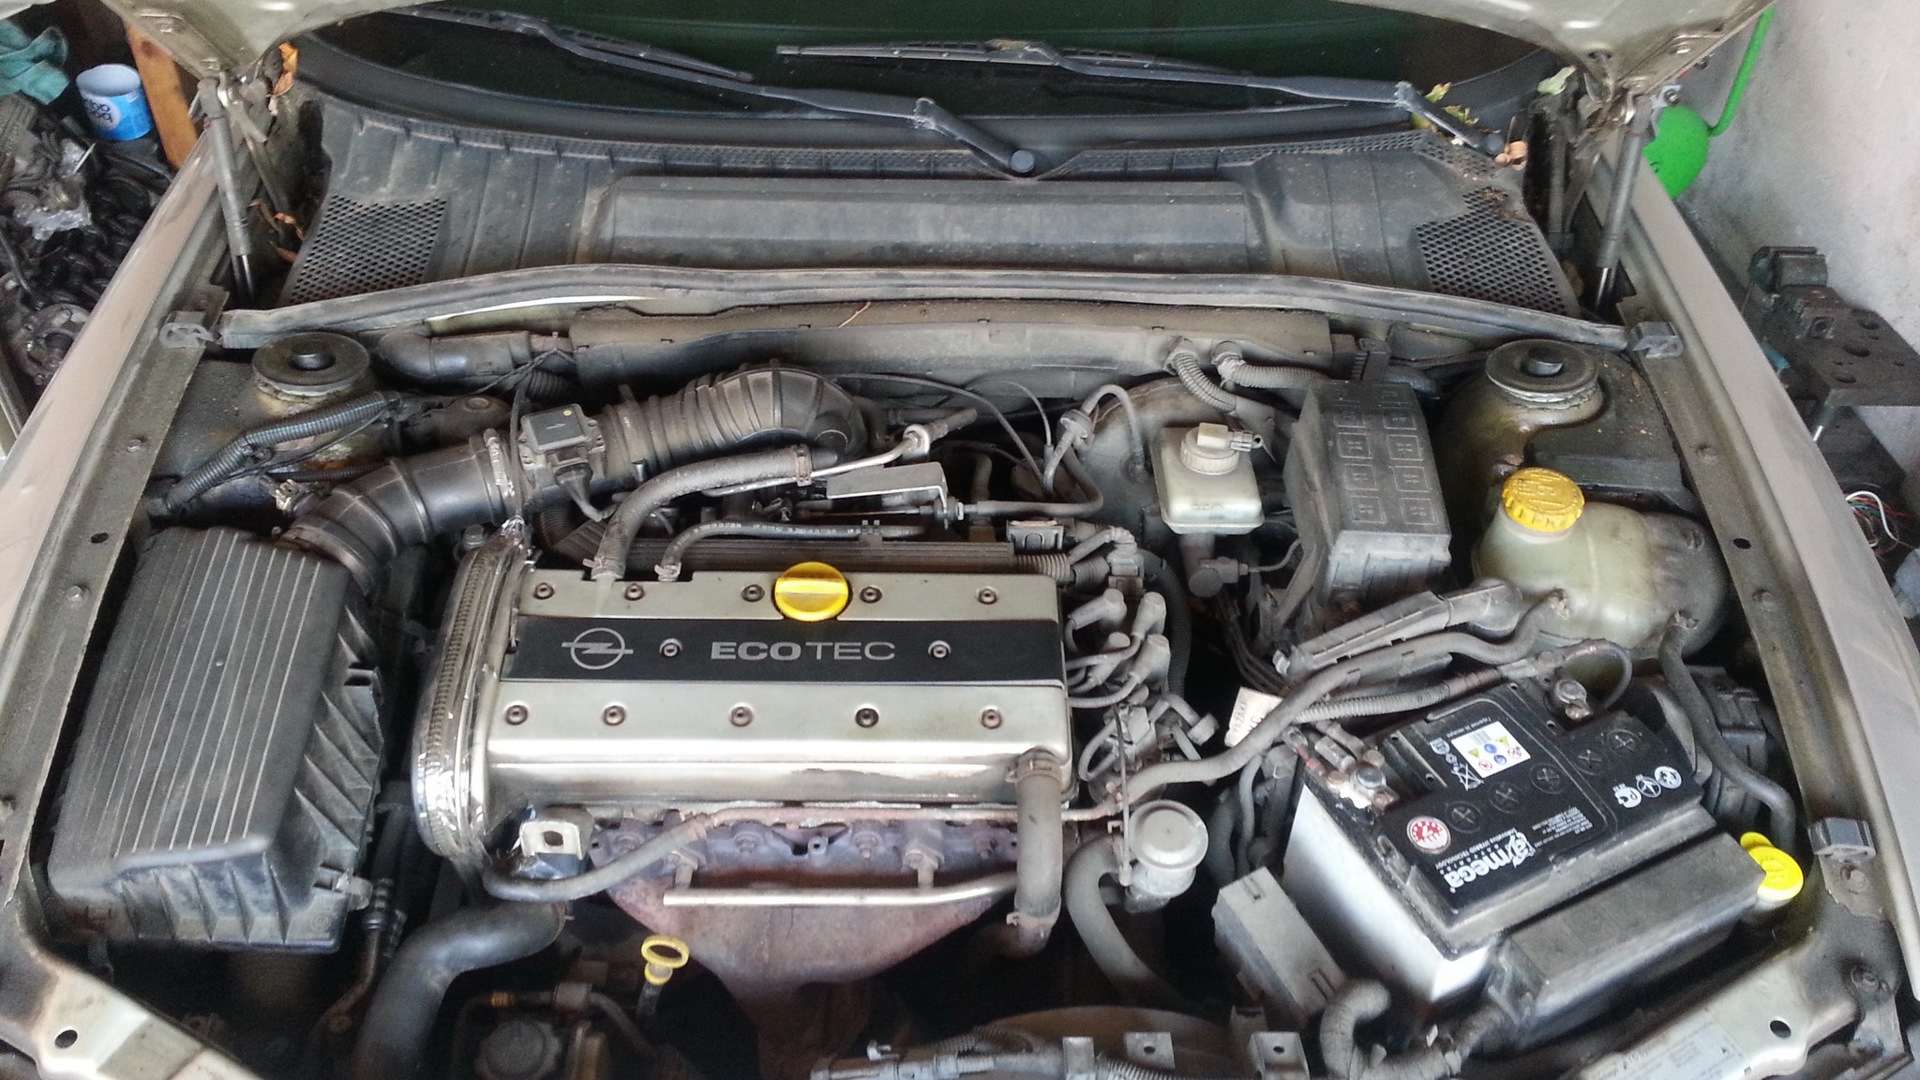 Мотор Opel Vectra b 1.8 x18xe 1. Двигатель Опель Вектра б 1.8 x18xe. Опель Вектра б x18xe. Opel Vectra b двигатель 1.8.